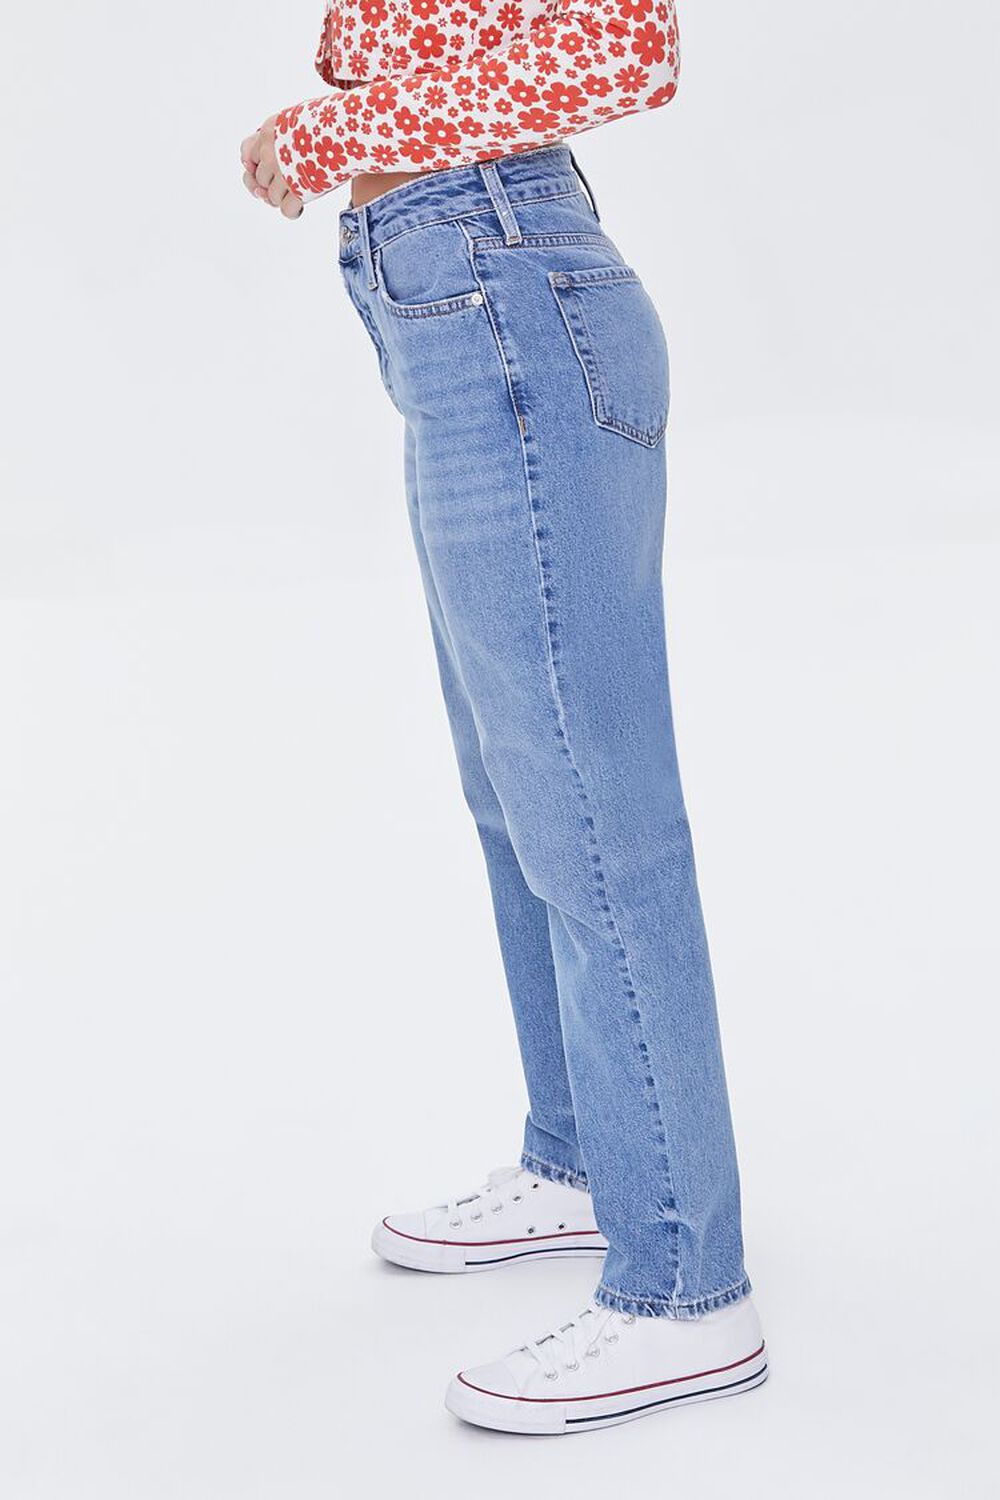 MEDIUM DENIM Recycled Cotton High-Rise Mom Jeans, image 3